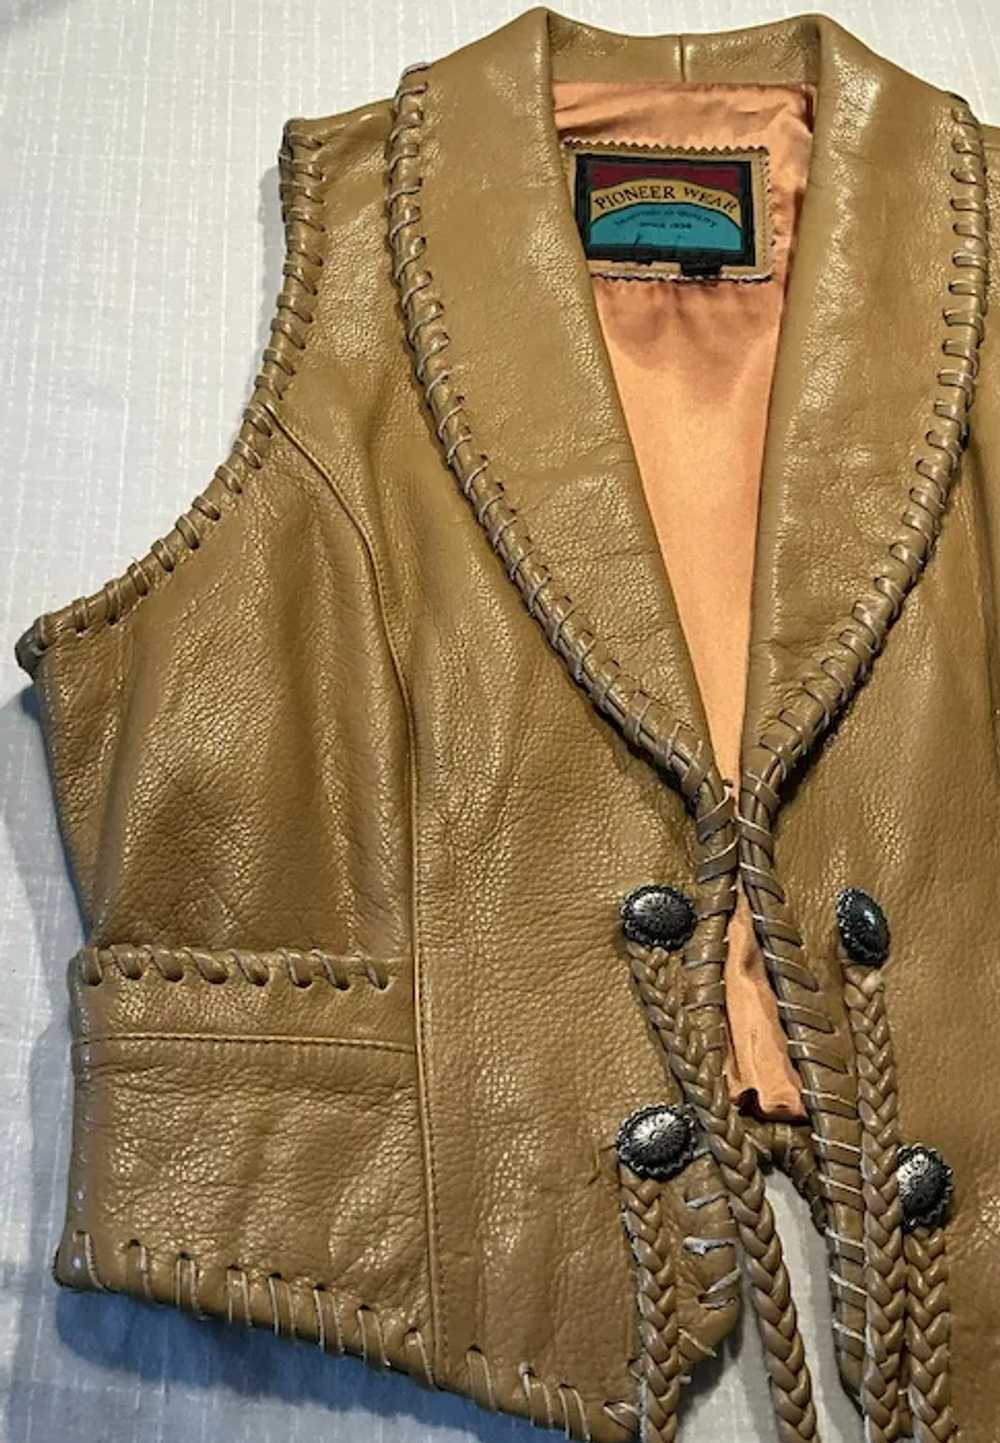 Pioneer Wear Tan Leather Vintage Vest - image 2